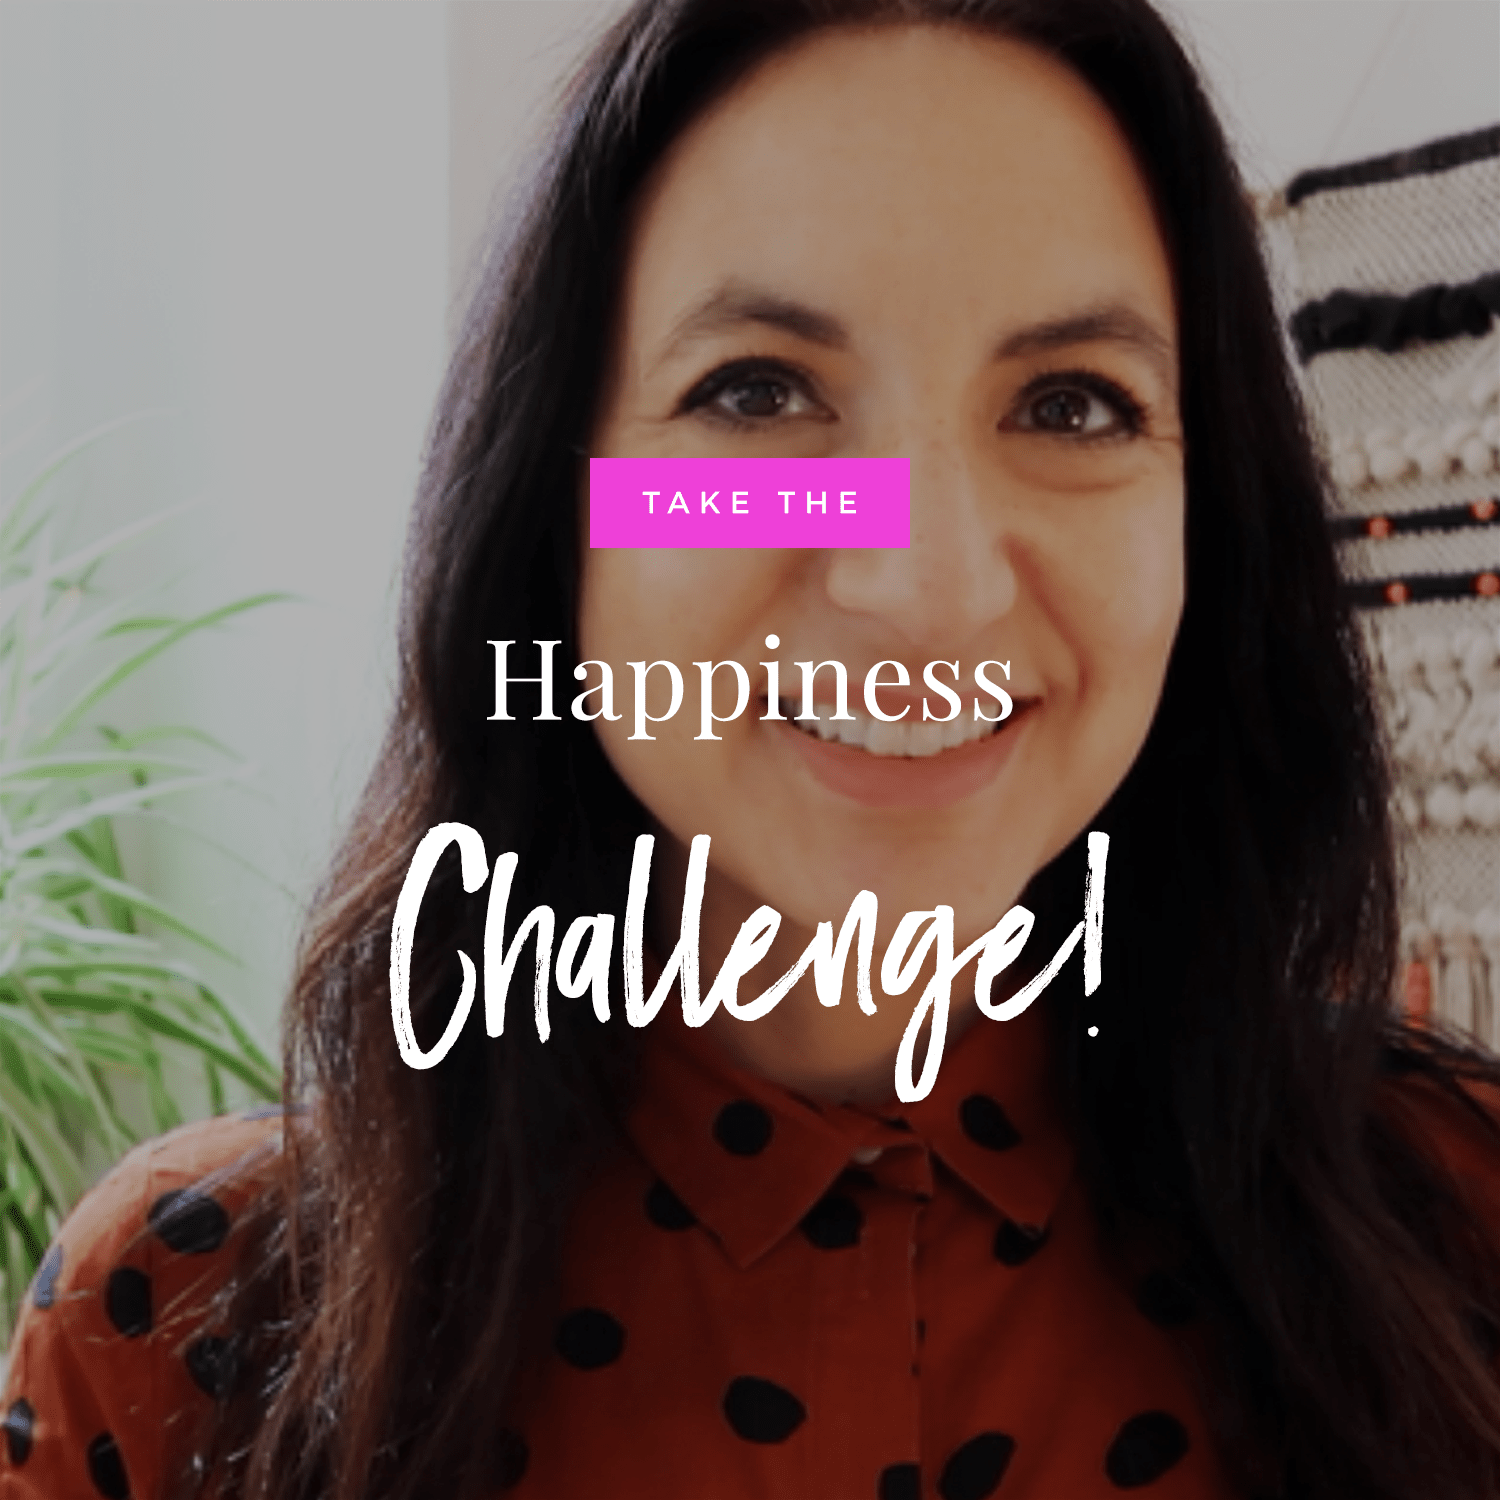 Take The Happiness Challenge!